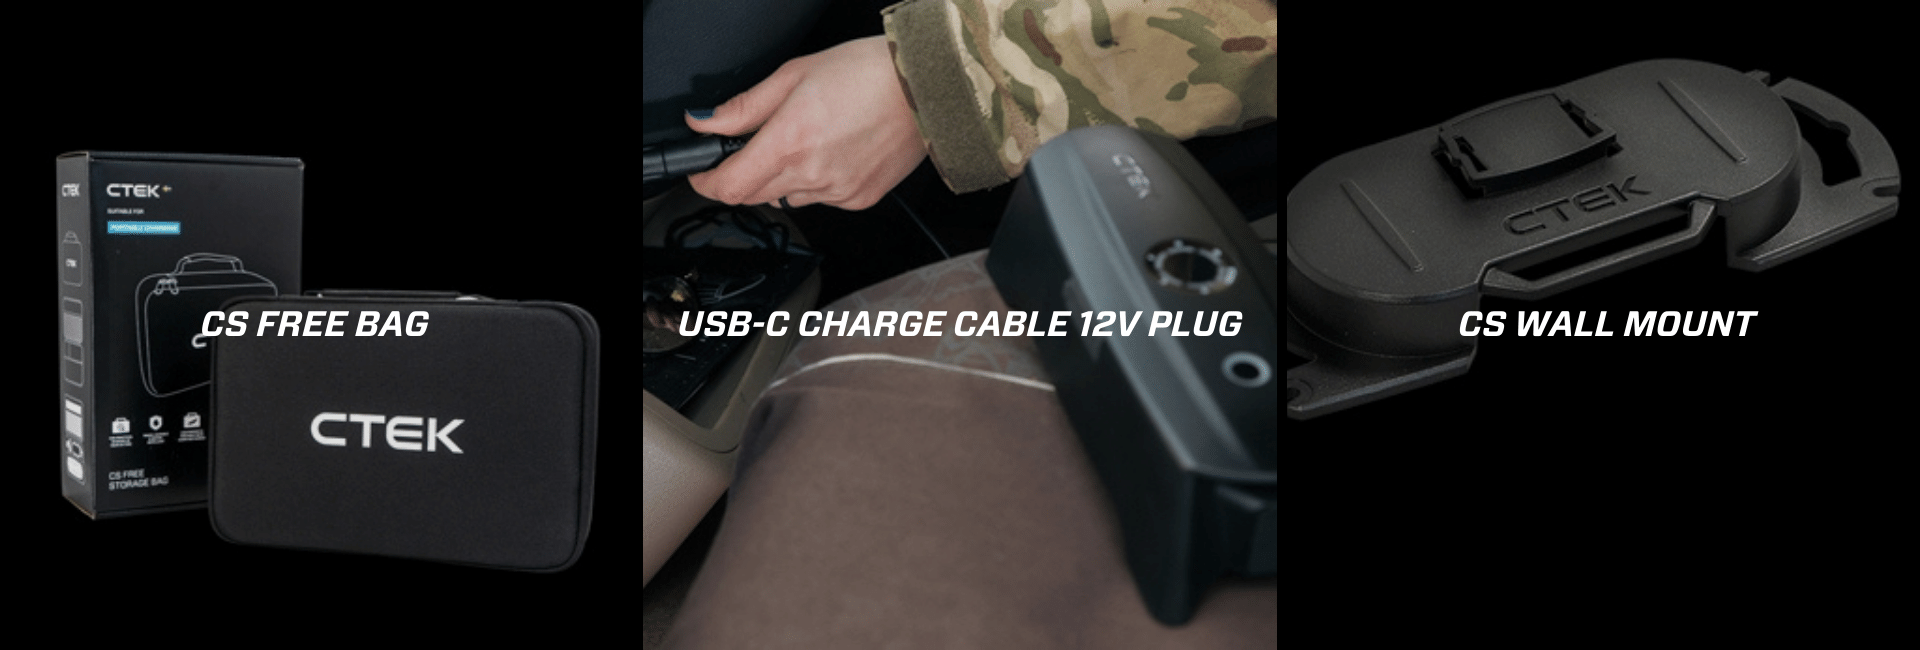 CTEK USB-C Charger Cable for CS Free 12 v Cig Plug, CTEK